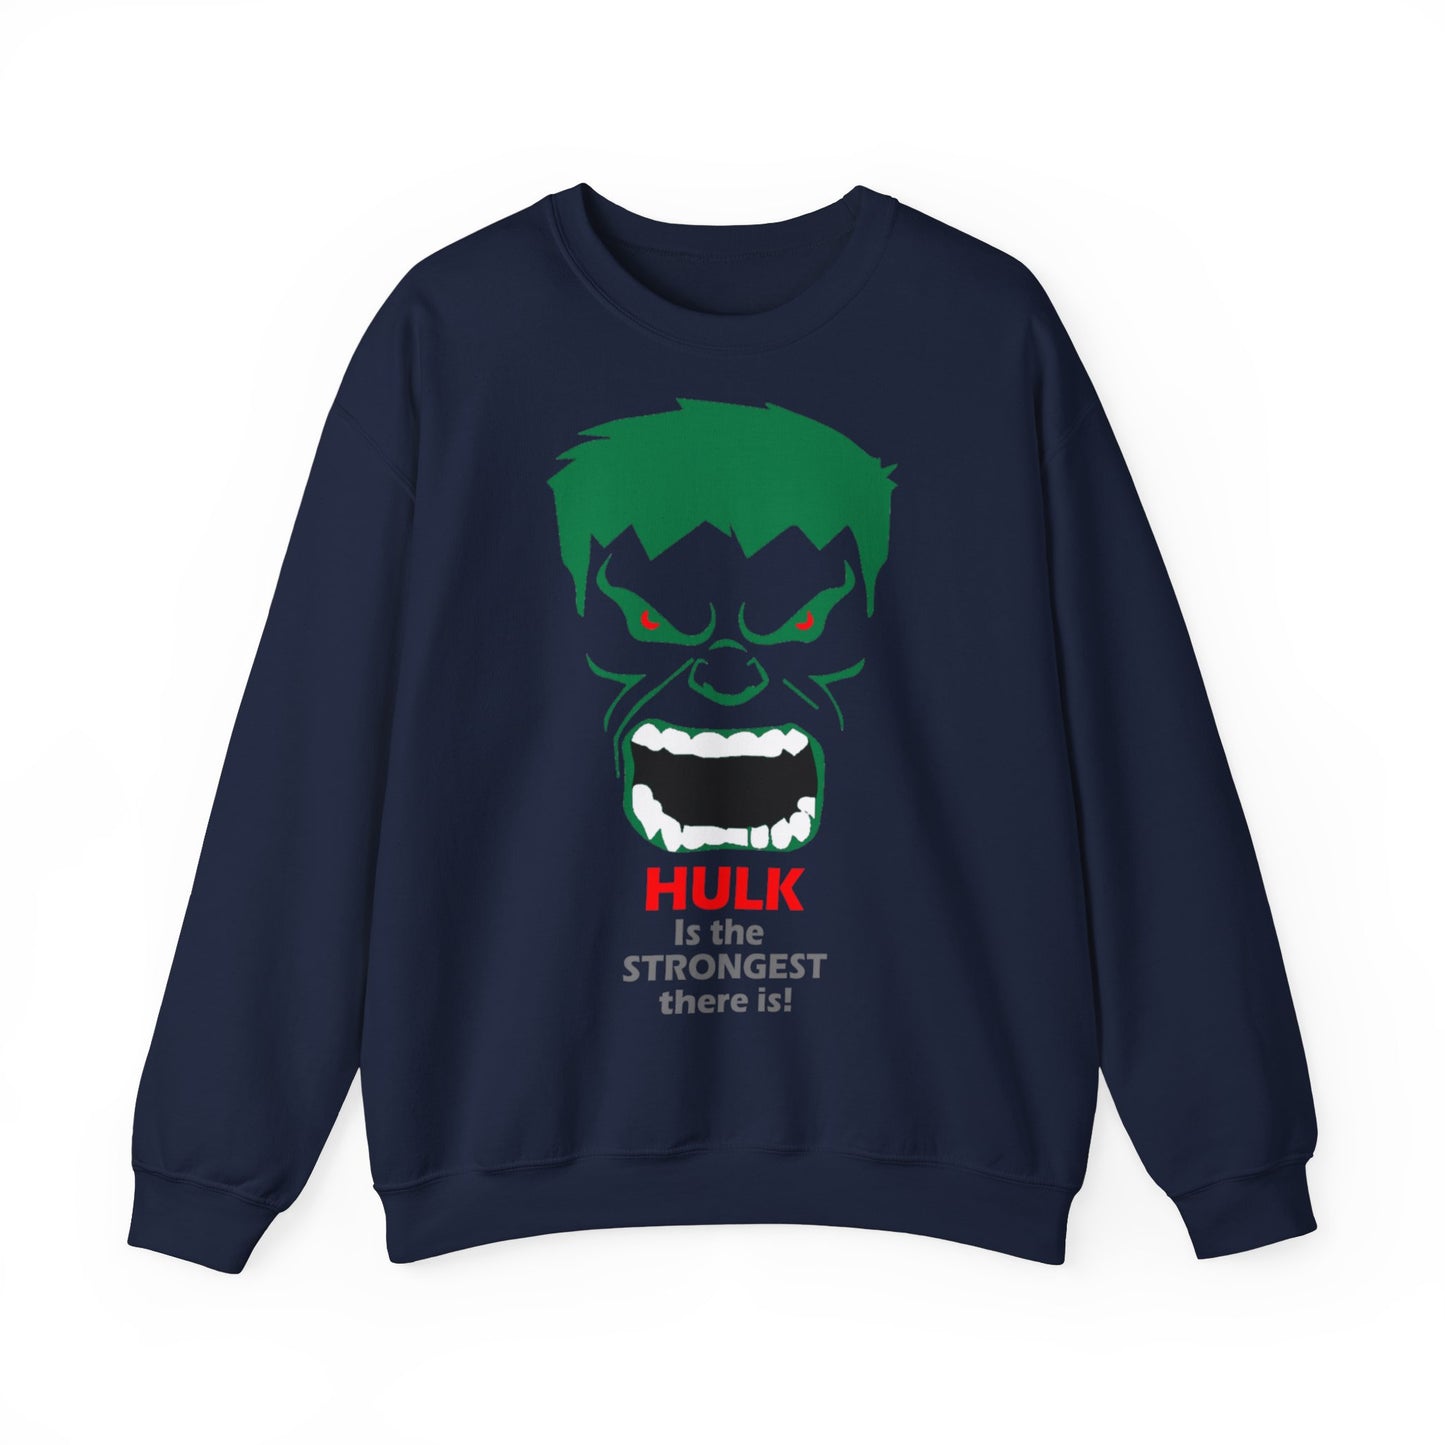 Hulk, Marvel, Green Giant, Women and Men Unisex, Crew Neck Sweatshirt